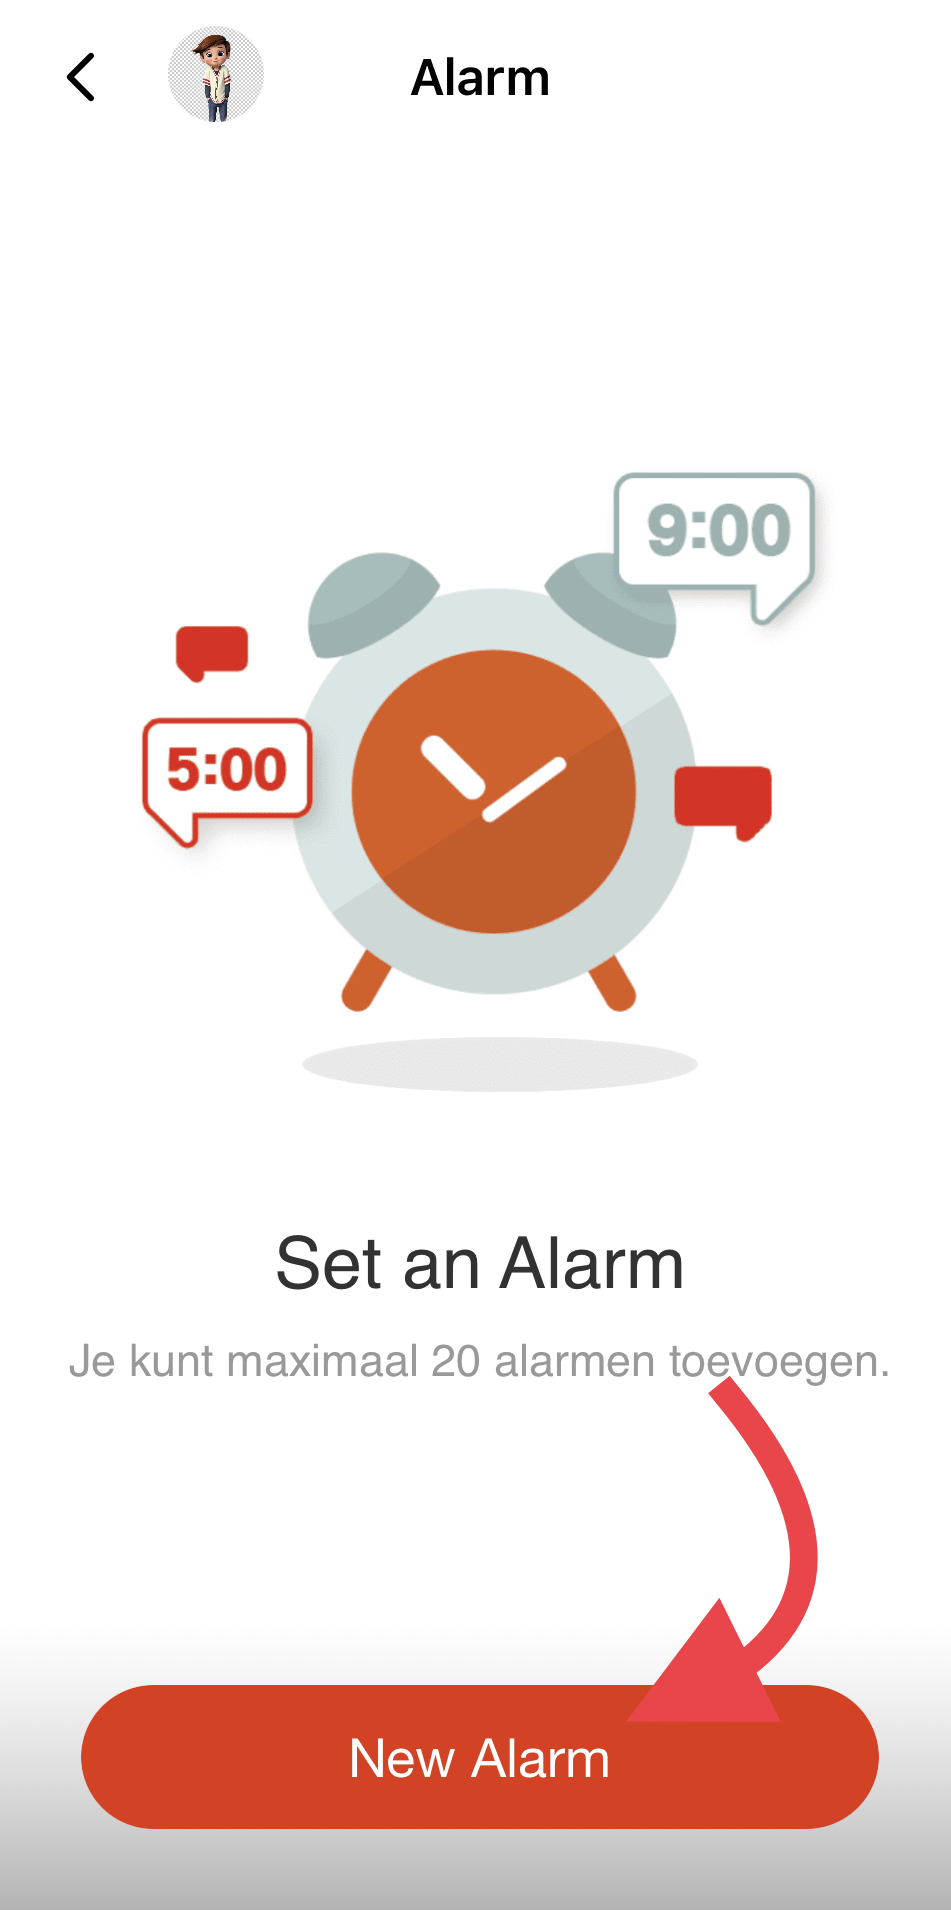 Alarm_NL_2.jpeg